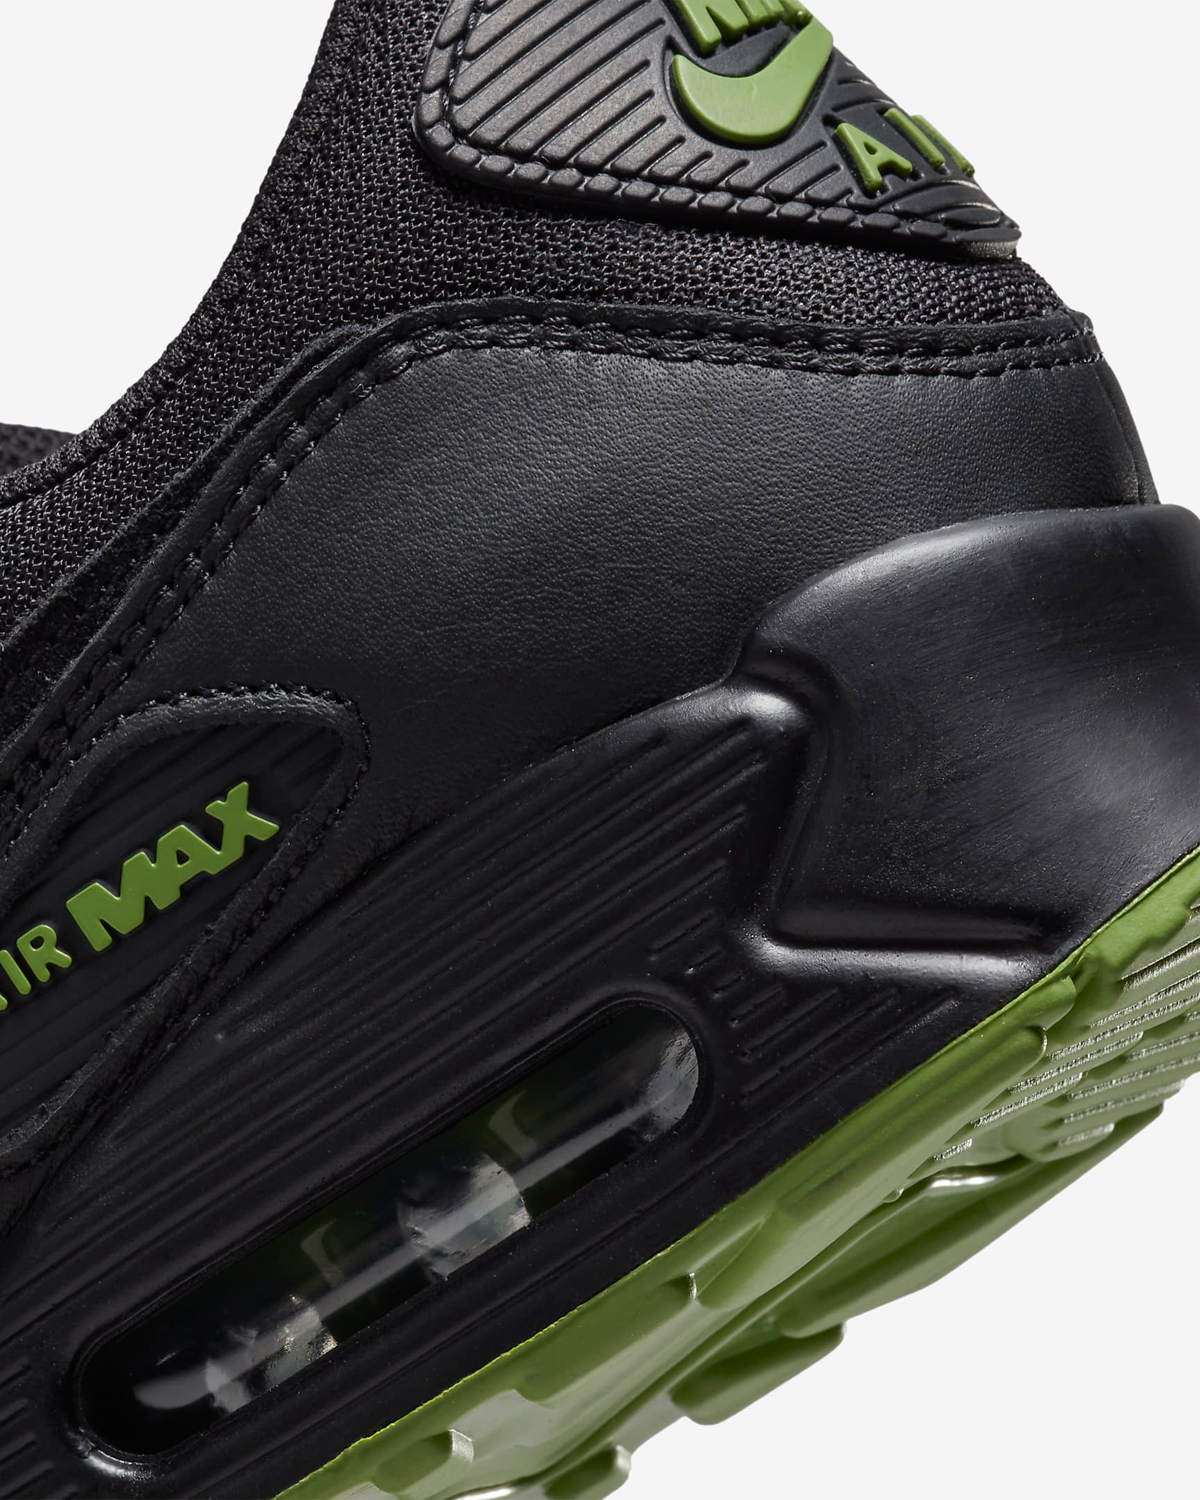 Nike-Air-Max-90-Black-Chlorophyll-8